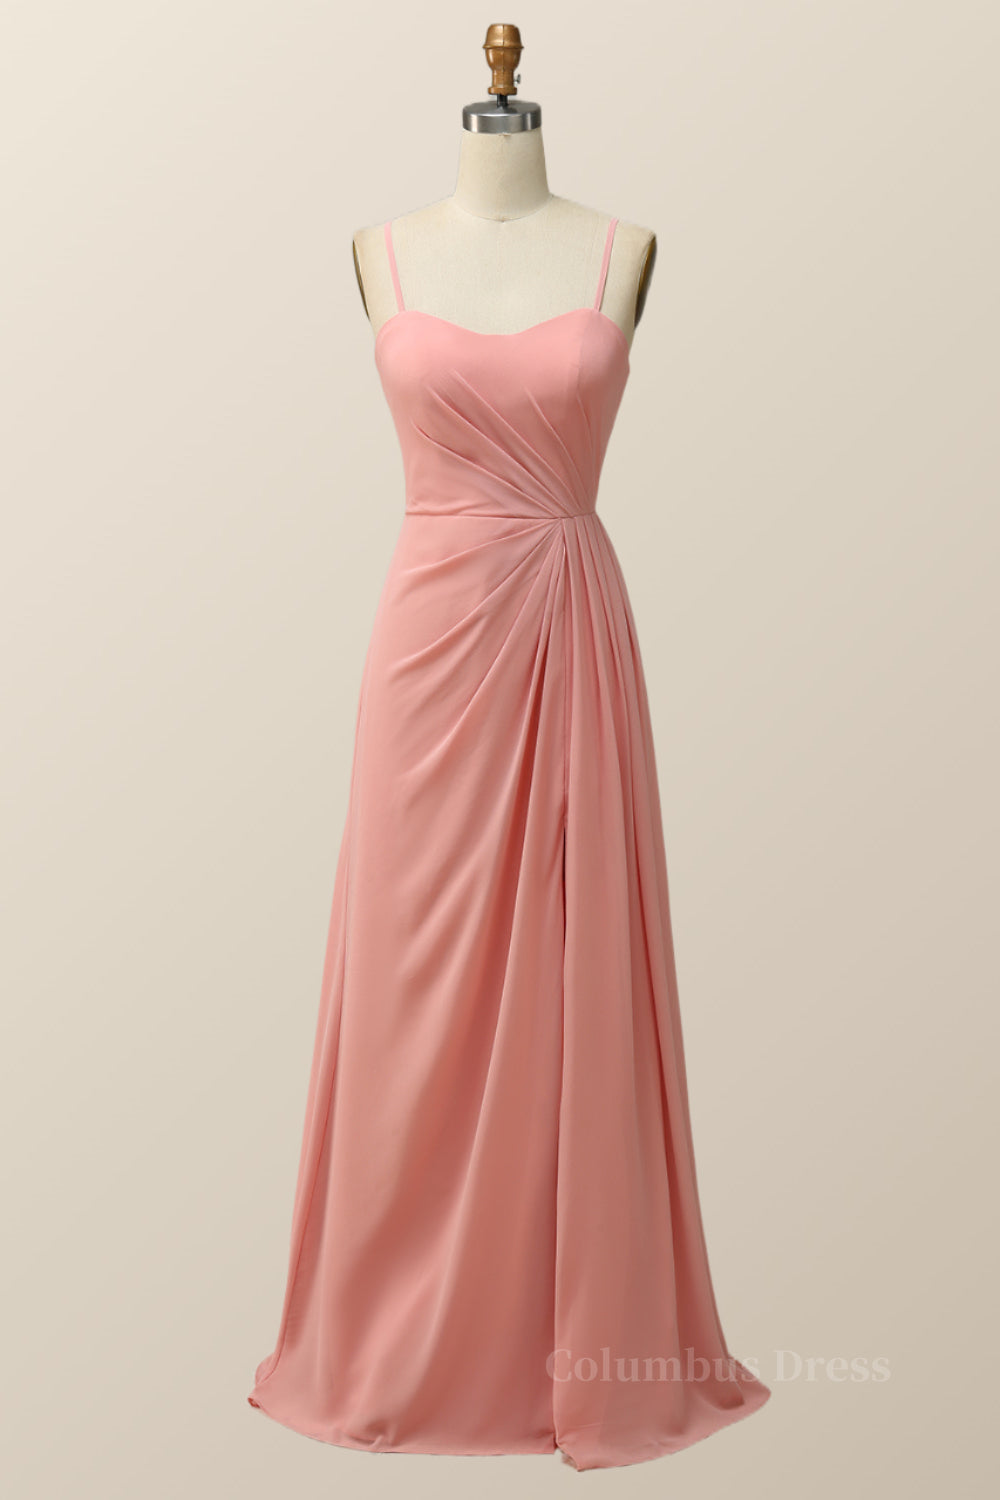 Spaghetti Straps Blush Pink Chiffon A-line Long Corset Bridesmaid Dress outfit, Prom Dresses 2018